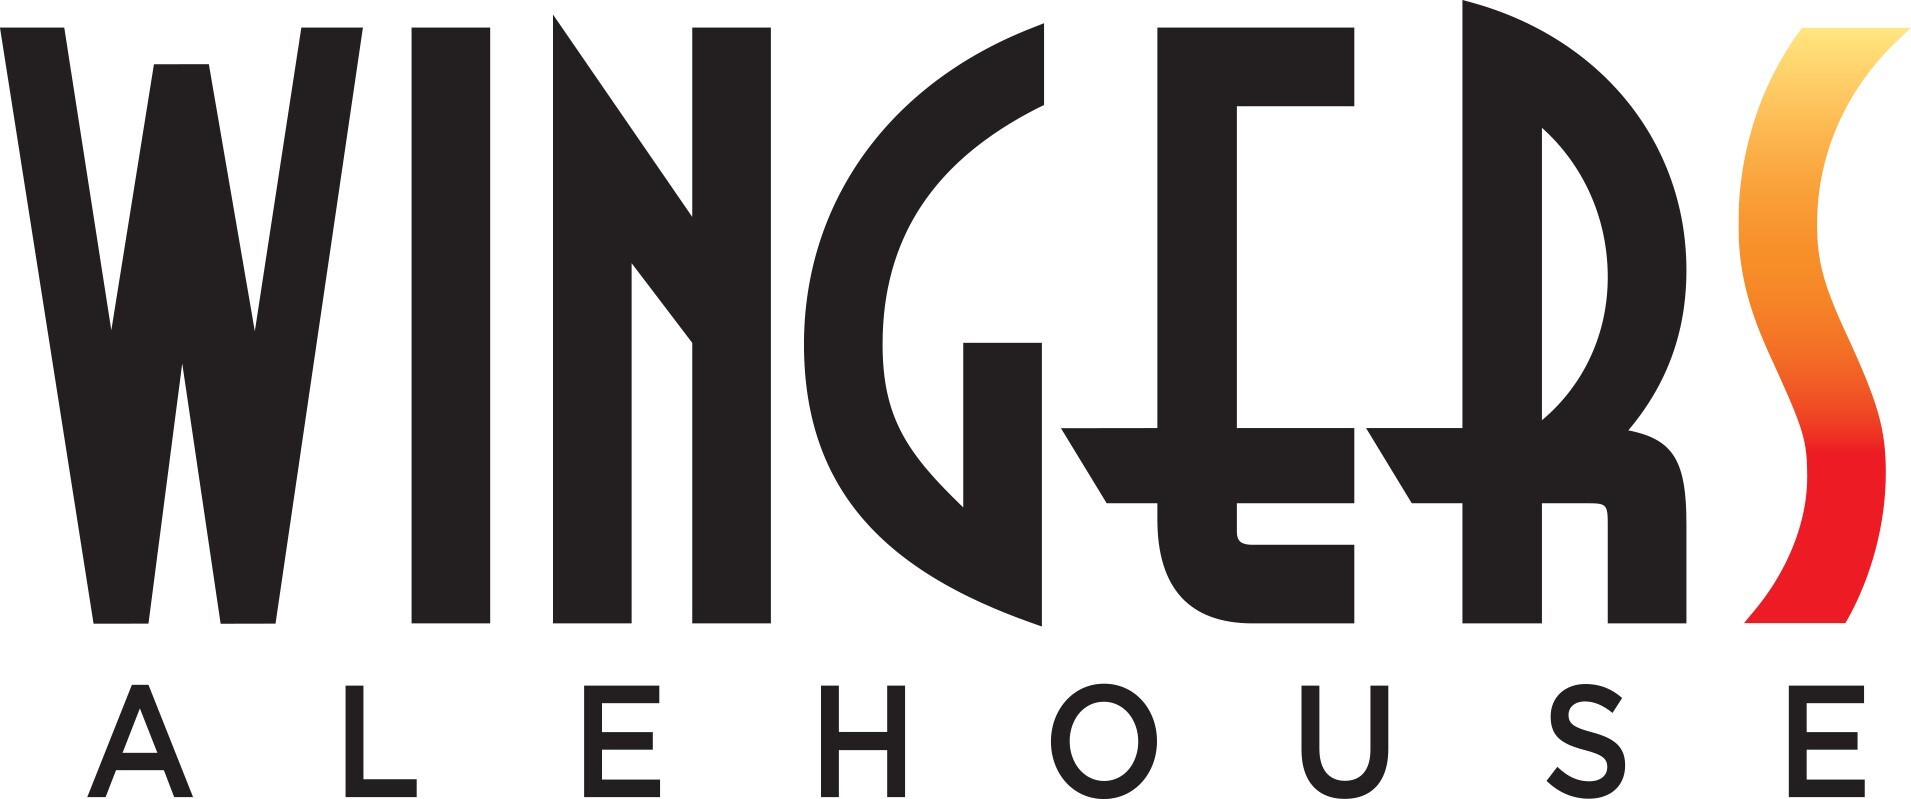 Wingers Restaurant & Alehouse Franchise